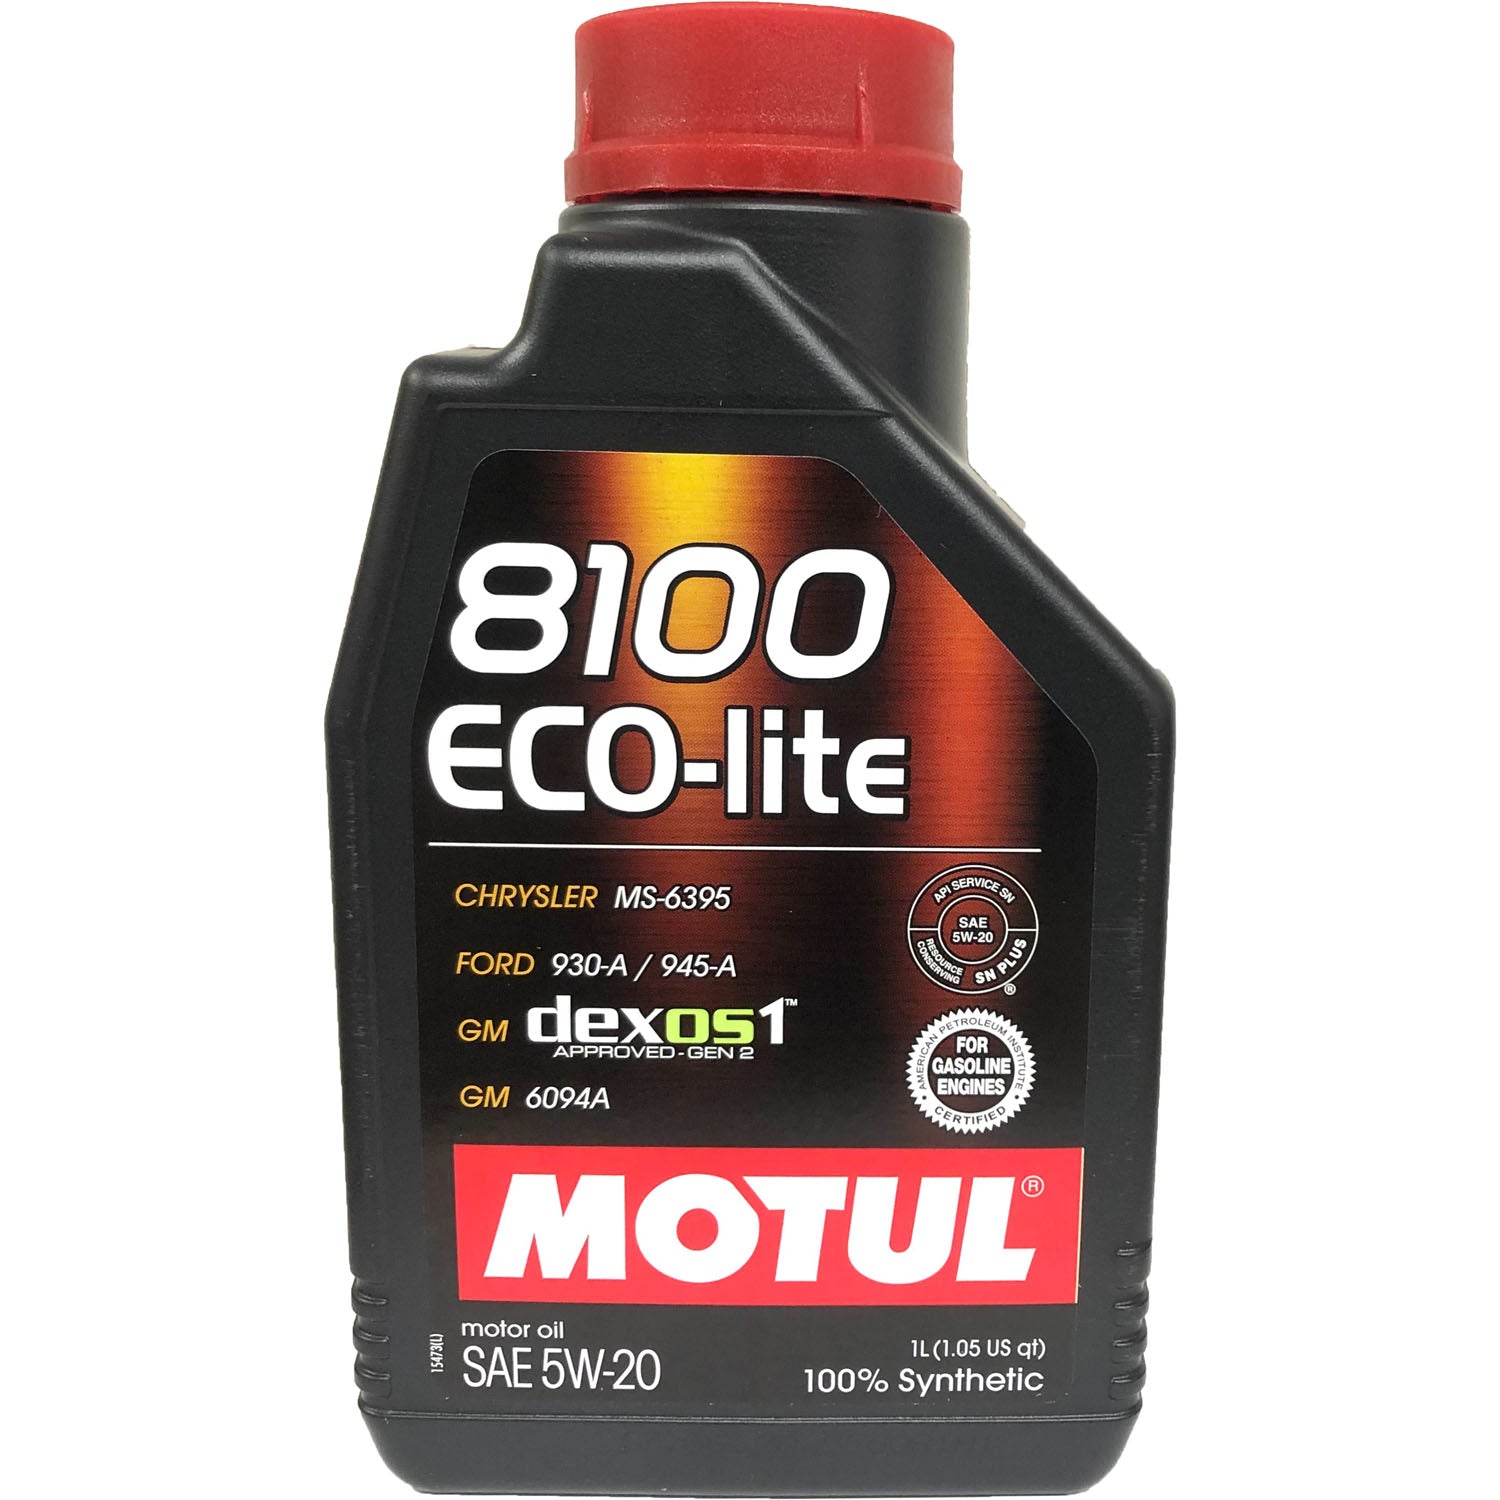 Motul 8100 Eco-Lite Synthetic Motor Oil 5W20 - 1 Liter